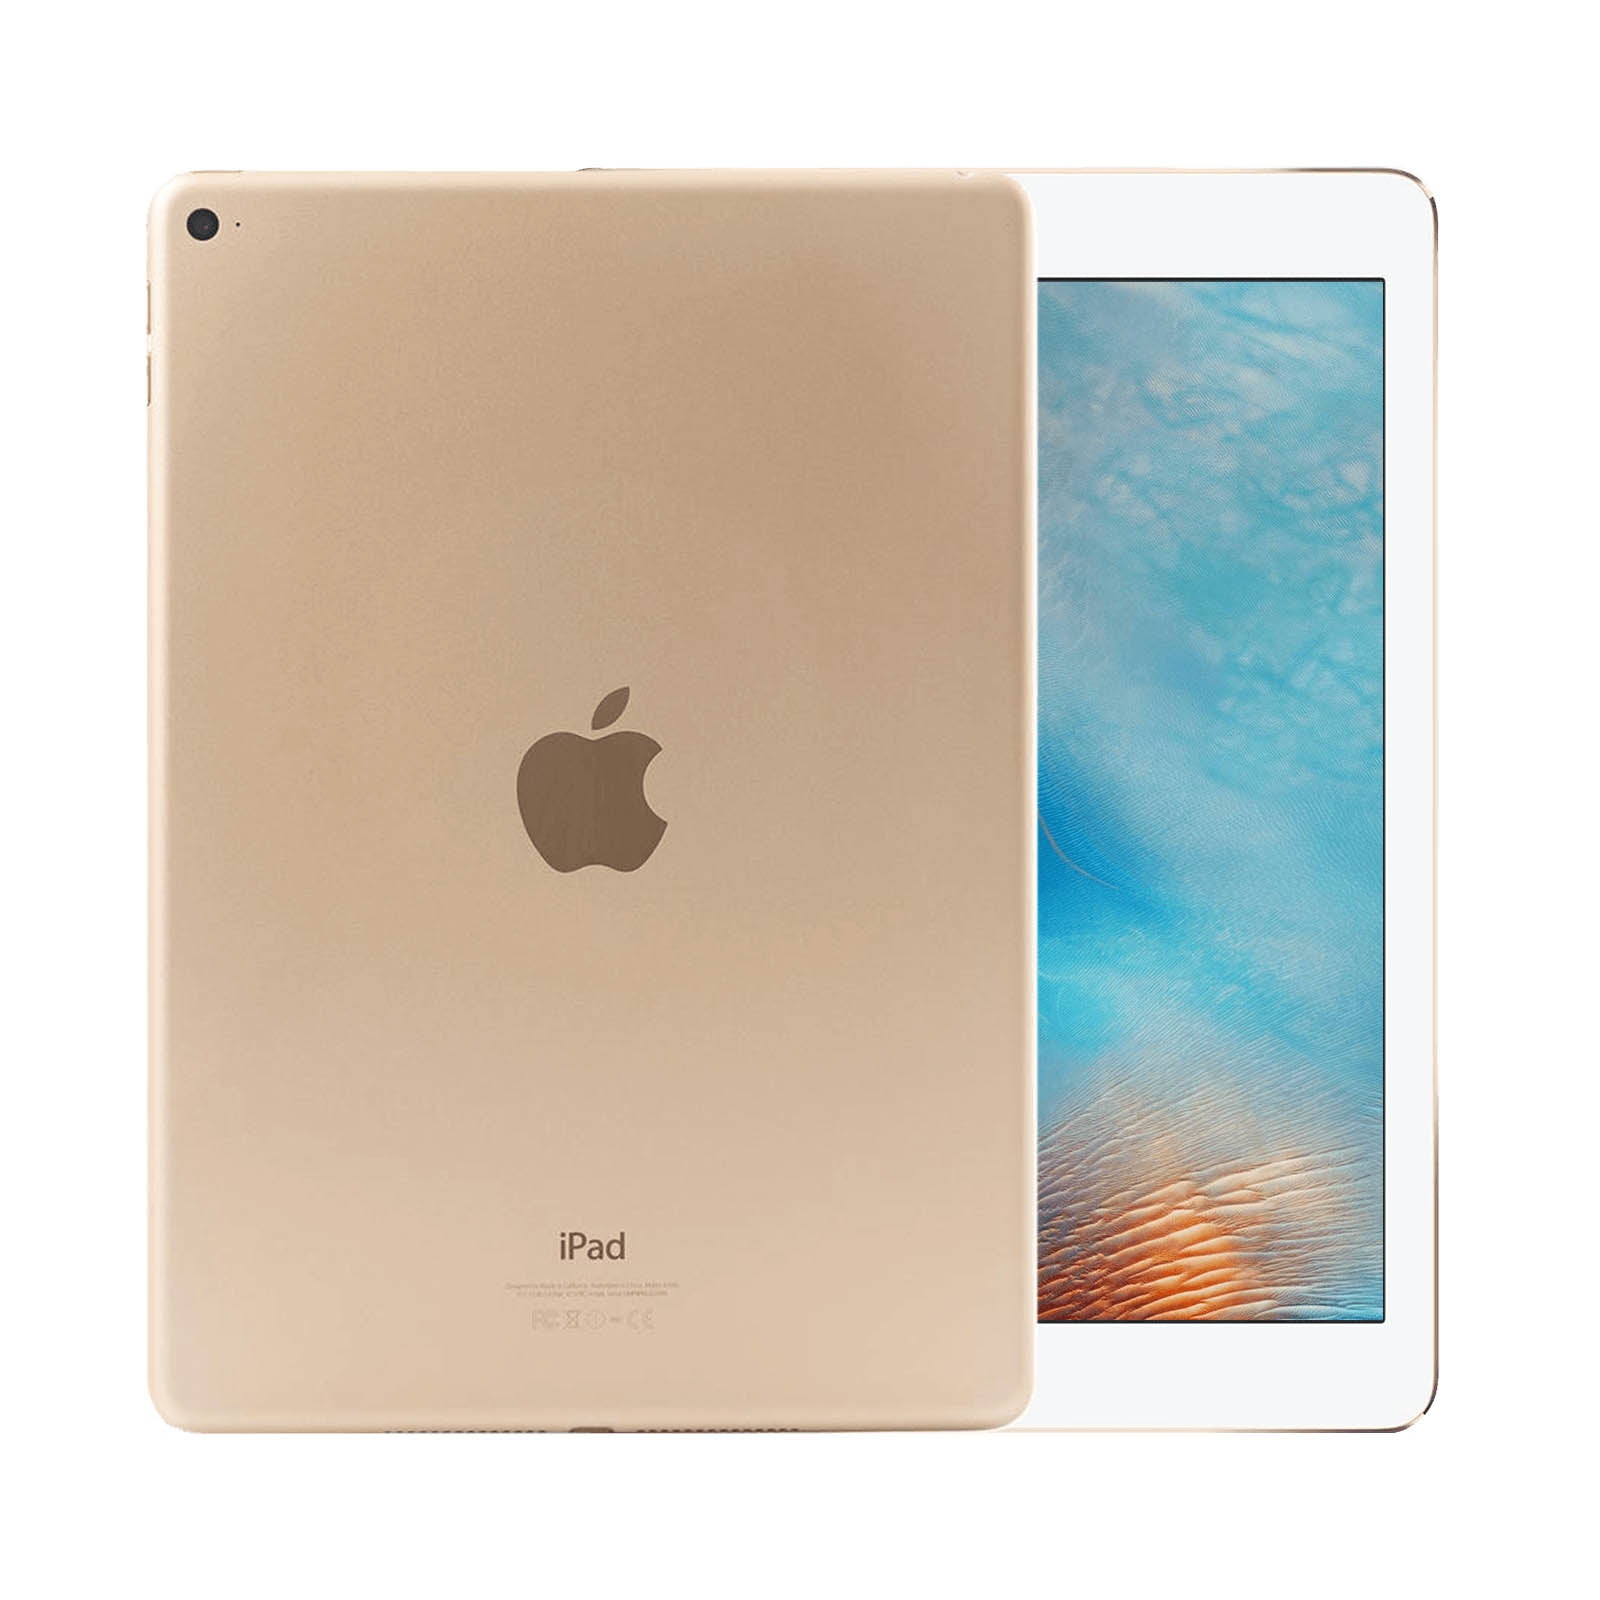 Apple iPad Air 2 16GB Gold Good - WiFi